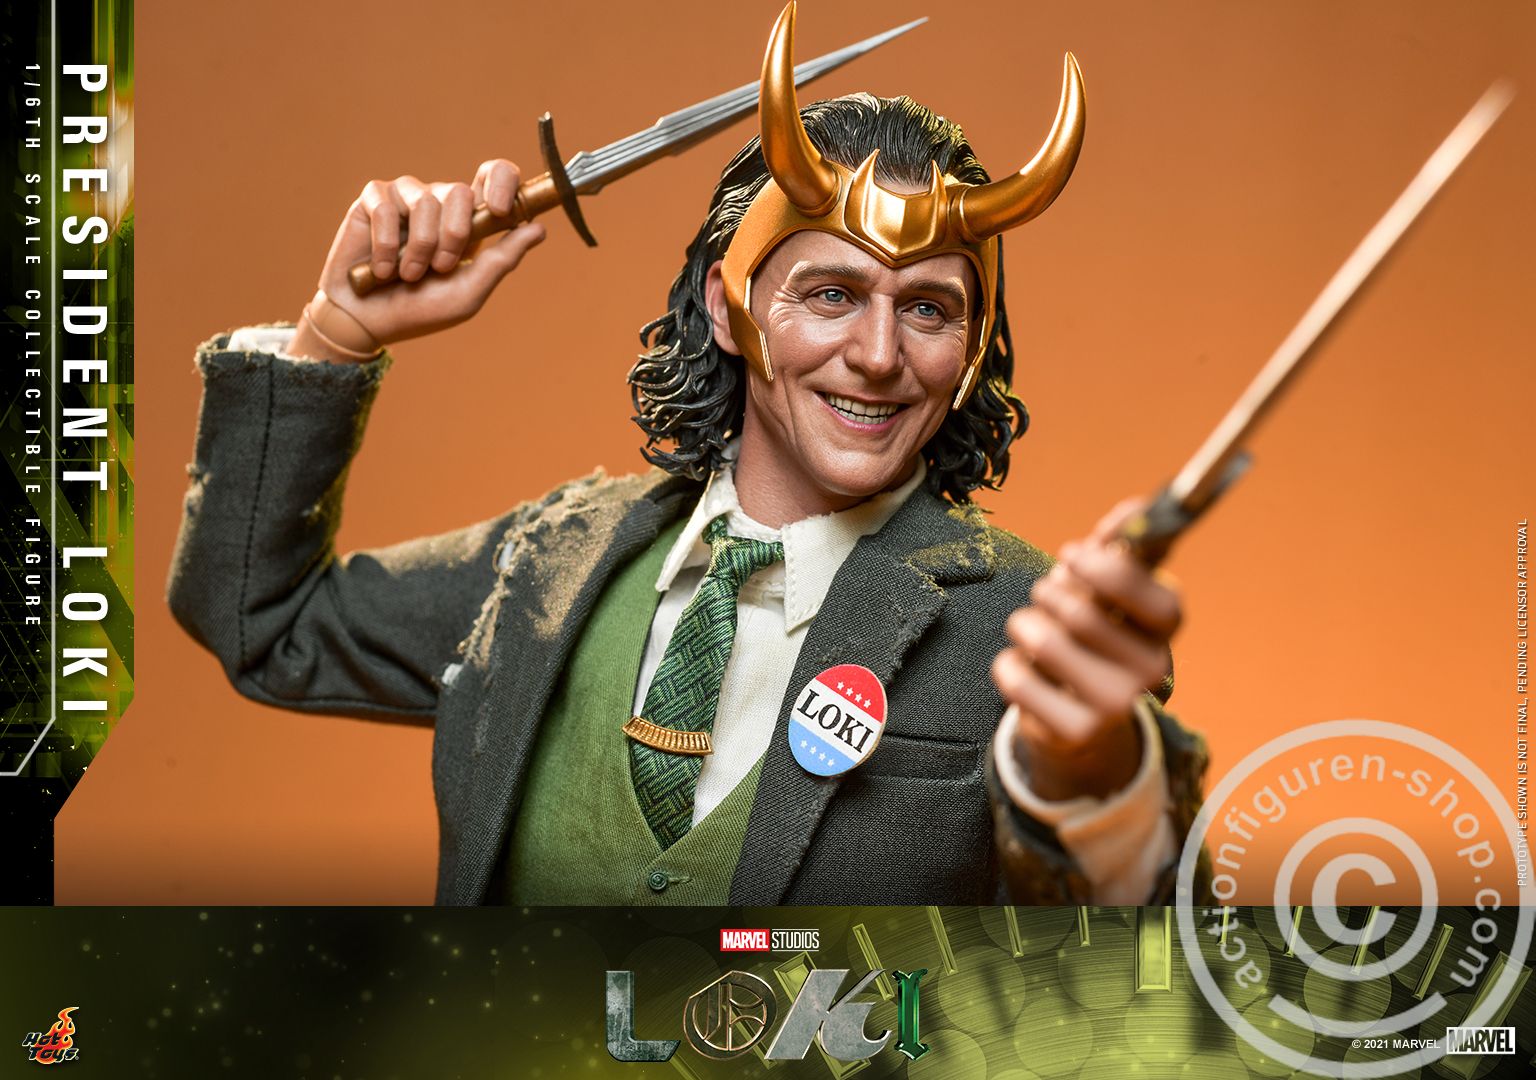 LOKI - President Loki